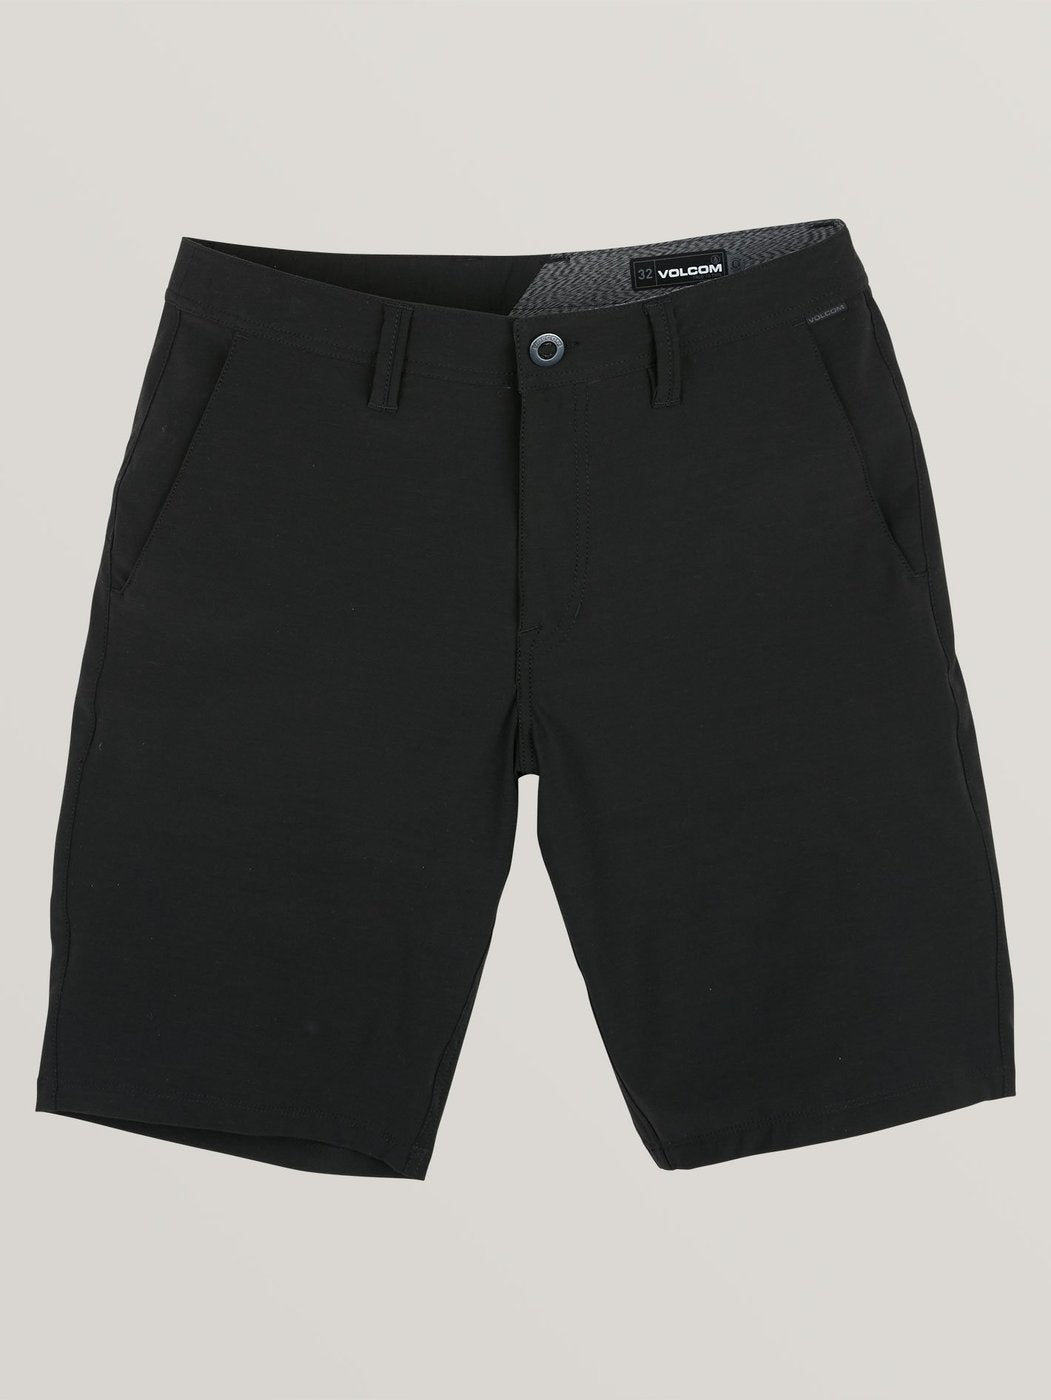 Volcom Frickin Static 2 Hybrid Mens Shorts - BKO Black Out 2022 Mens Shorts